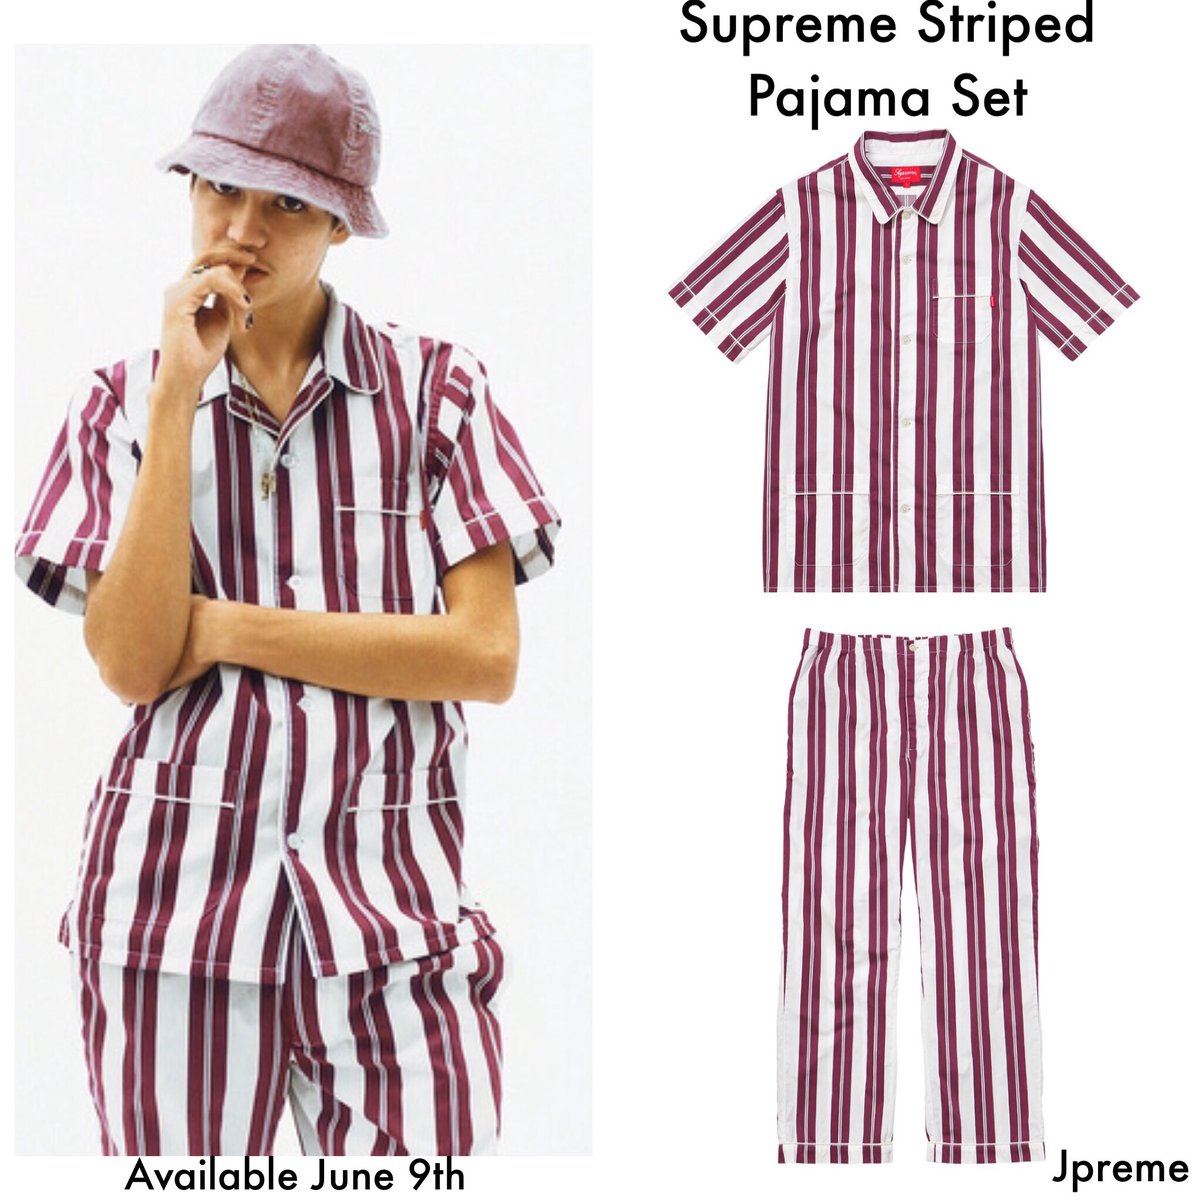 DropsByJay on X: Supreme Striped Pajama Set Me This Weekend